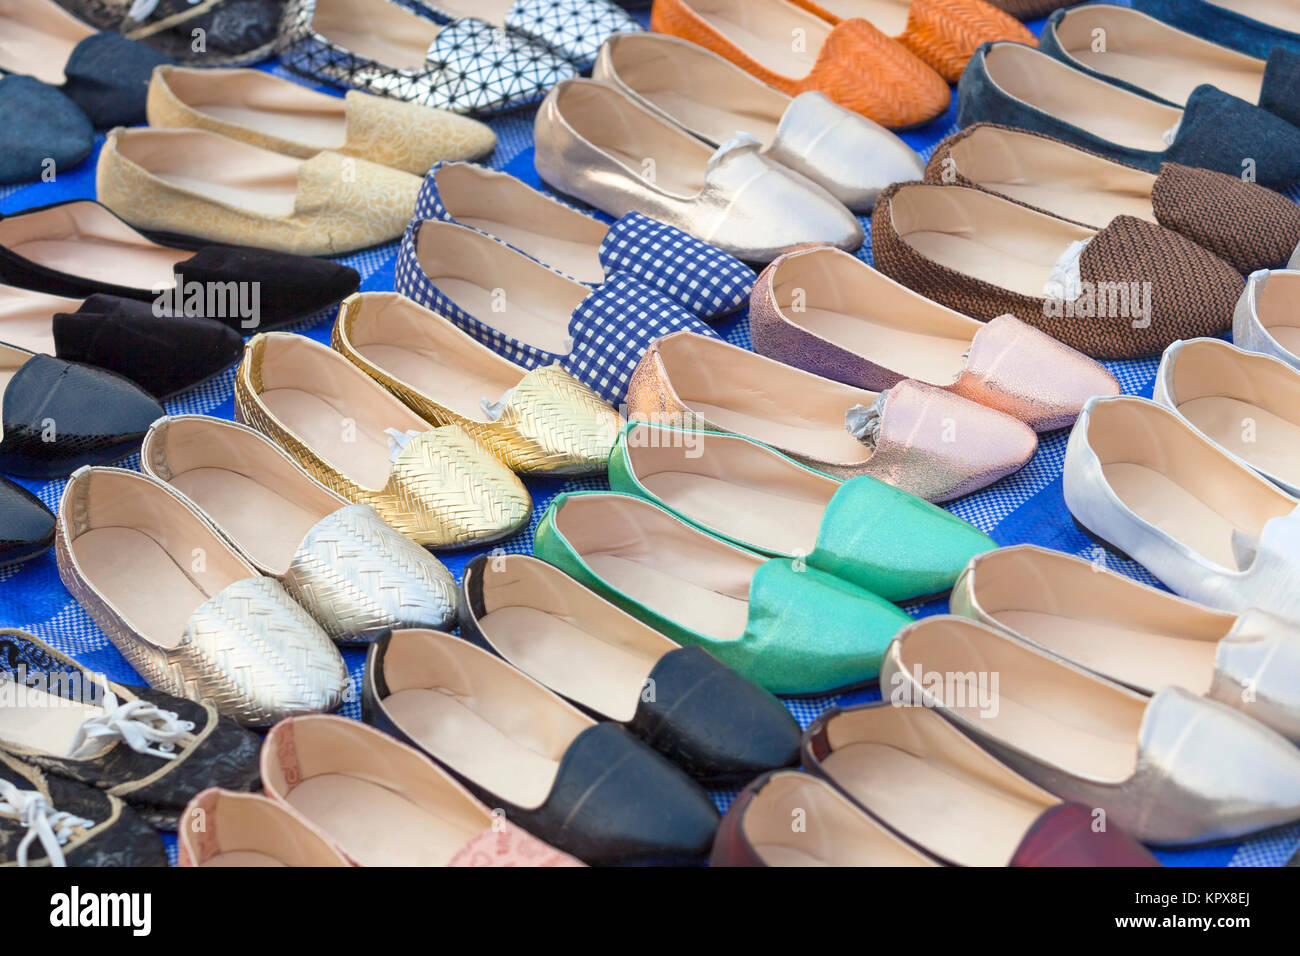 shoes, woman shoes Stock Photo - Alamy